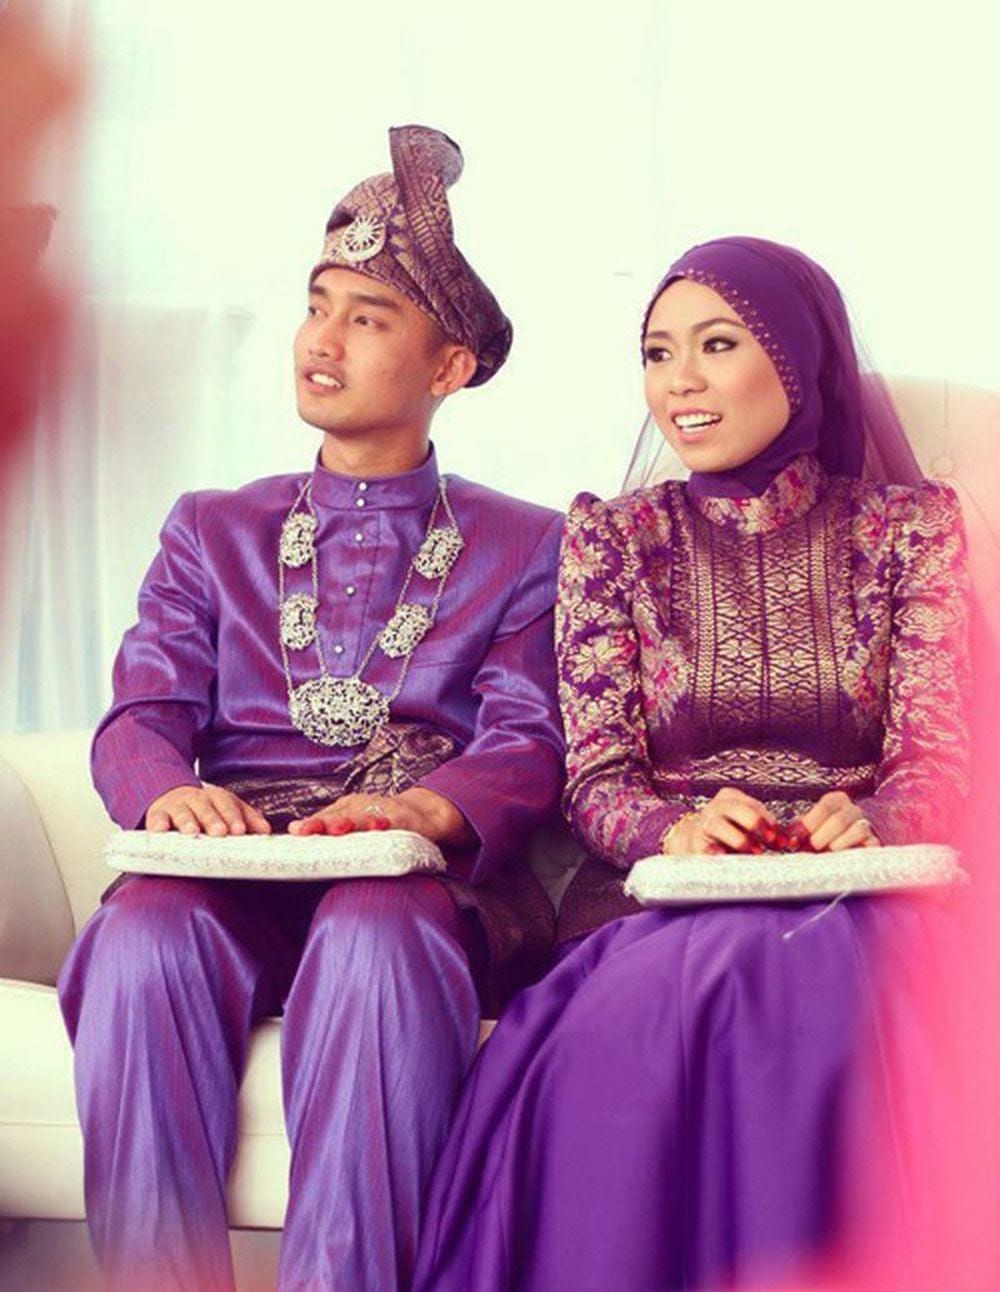 trang phục của malaysia, trang phục của người malaysia, trang phục của phụ nữ malaysia, trang phục cưới của malaysia, trang phục dân tộc malaysia, trang phục đi malaysia, trang phục du lịch malaysia, trang phục hồi giáo malaysia, trang phục khi du lịch malaysia, trang phuc malaysia, trang phục malaysia, trang phục người malaysia, trang phục phụ nữ malaysia, trang phục truyền thống của malaysia, trang phục truyền thống của người malaysia là gì, trang phục truyền thống của nước malaysia, trang phục truyền thống của phụ nữ malaysia, trang phục truyền thống malaysia, trang phục truyền thống nam malaysia, ý nghĩa trang phục malaysia